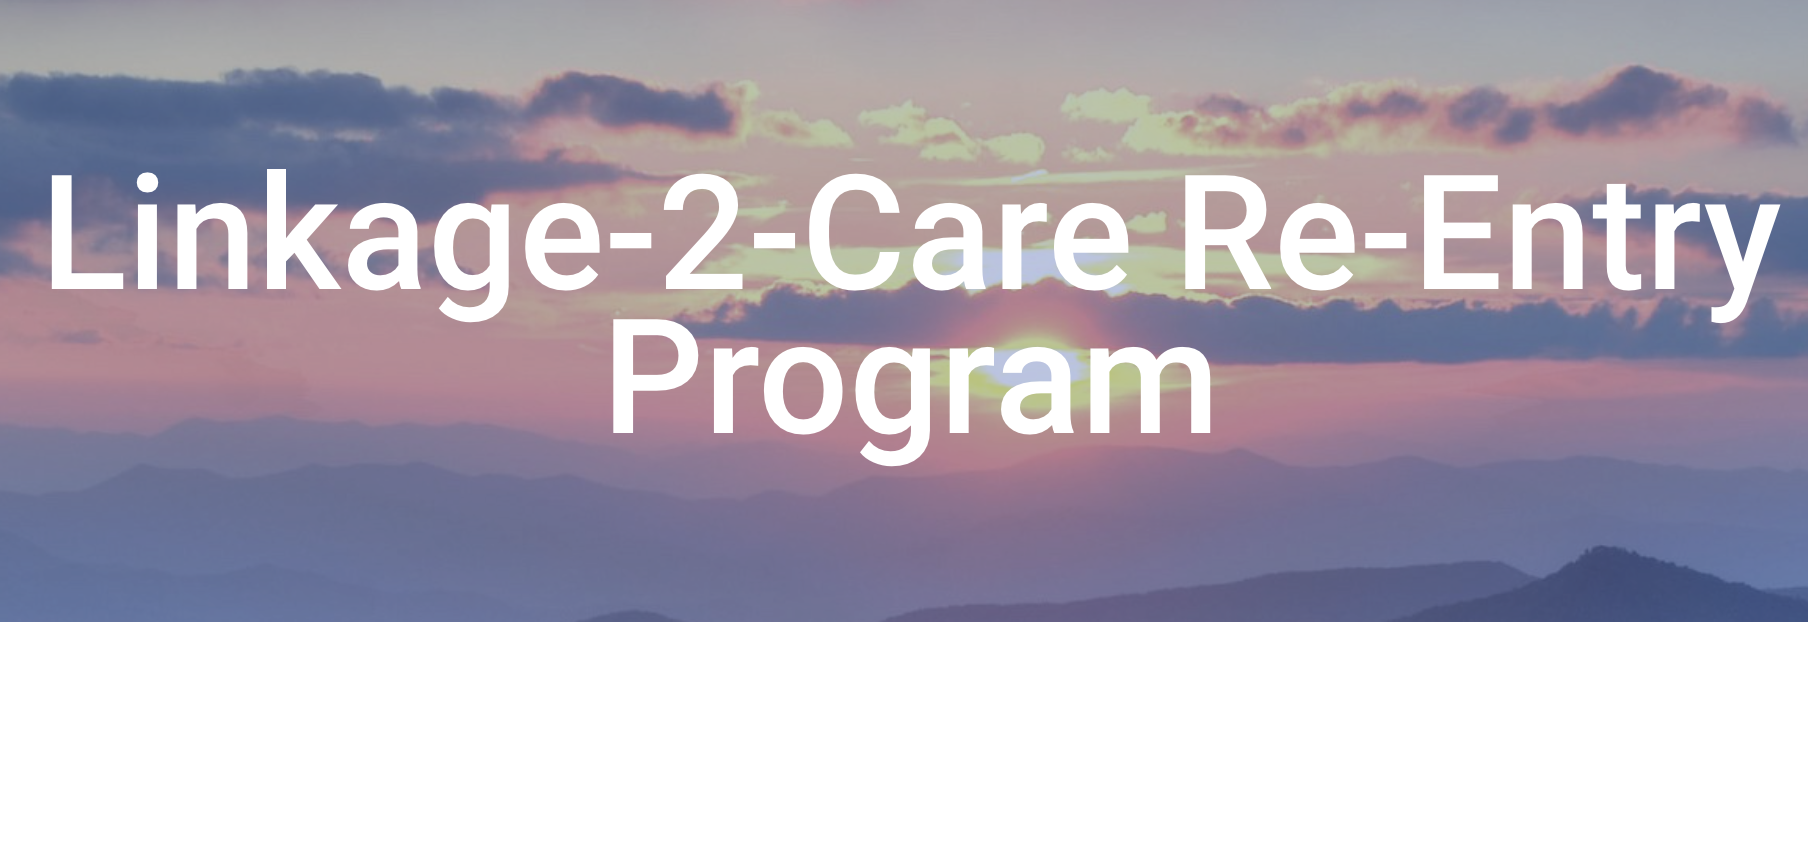 Sunrise's Linkage-2-Care on HealthBook Me